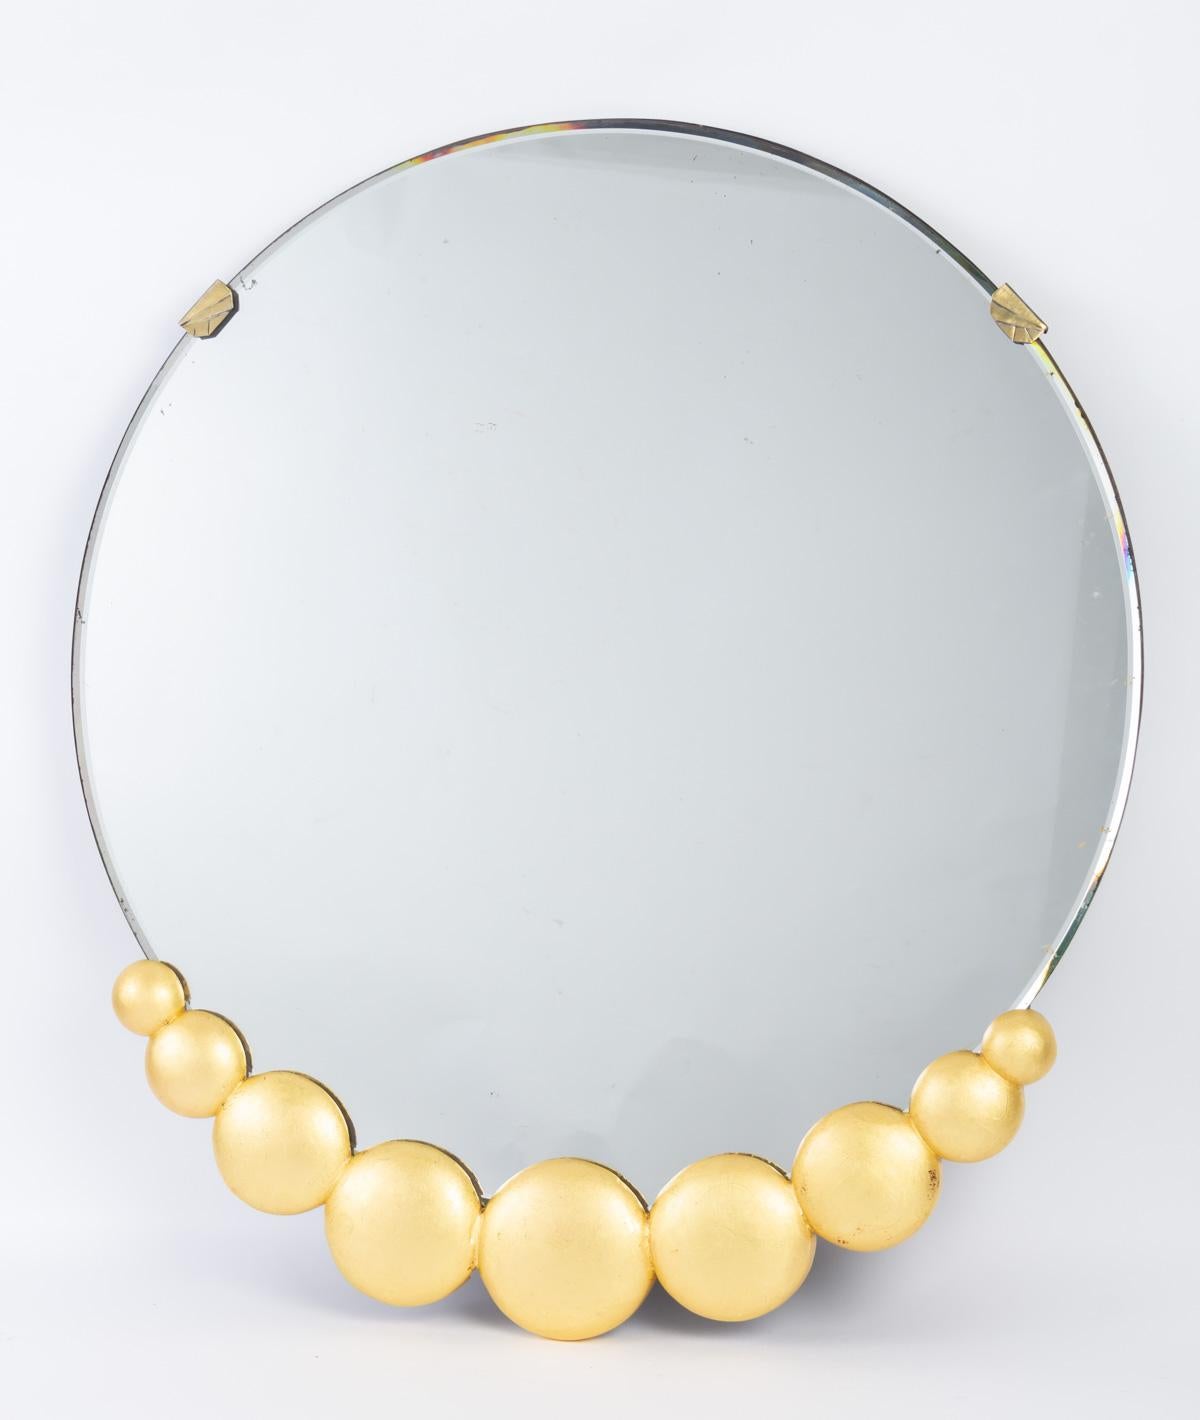 1930s mirror with gold leaf, bevelled glass. Paris.

H: 67 cm, d: 60 cm